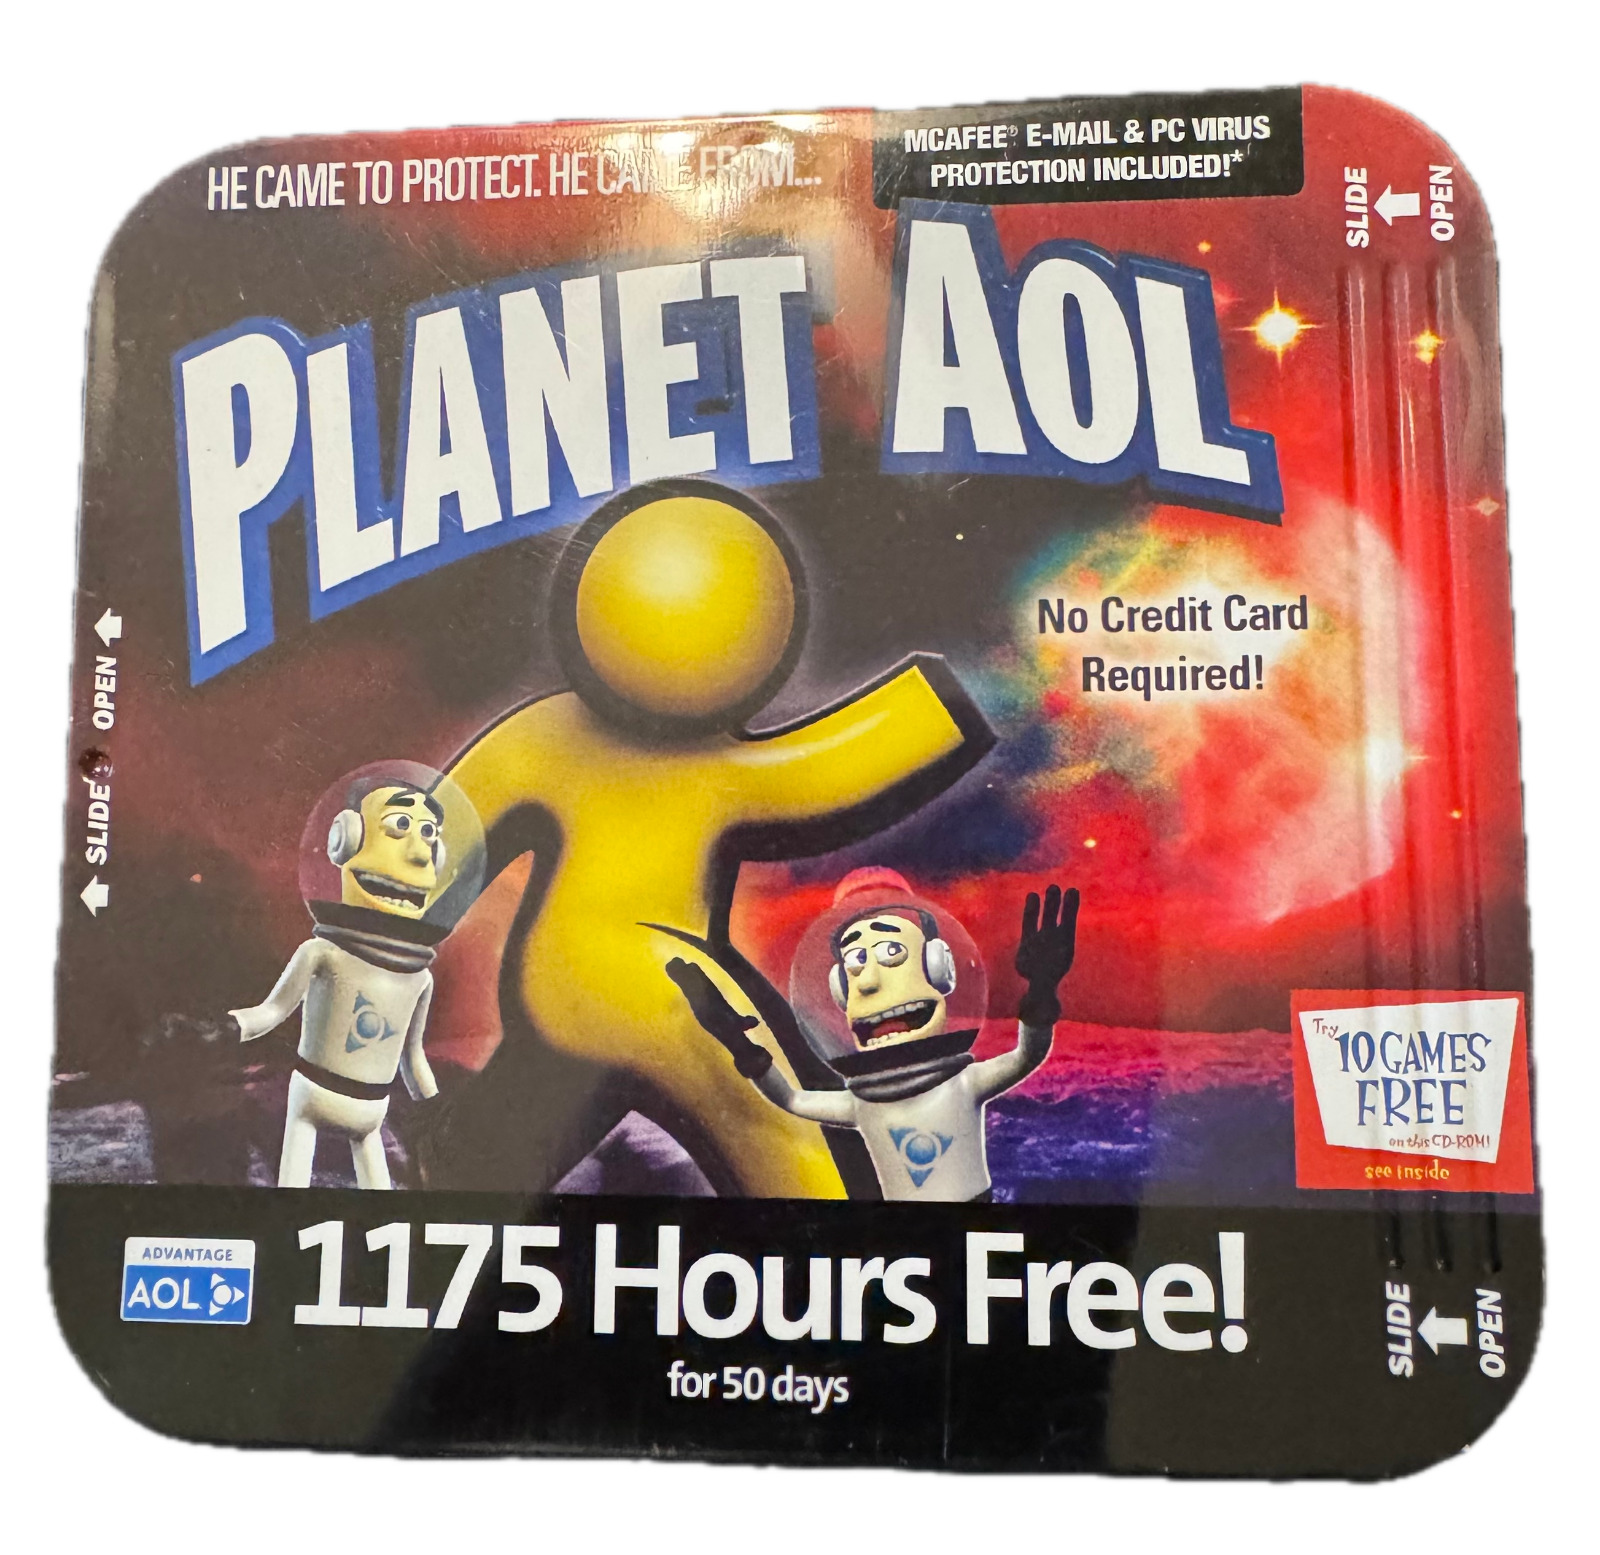 Vintage 2004 Planet AOL CD ROM AOL 1175 Hours, 10 Games Free, Unused, Metal Case